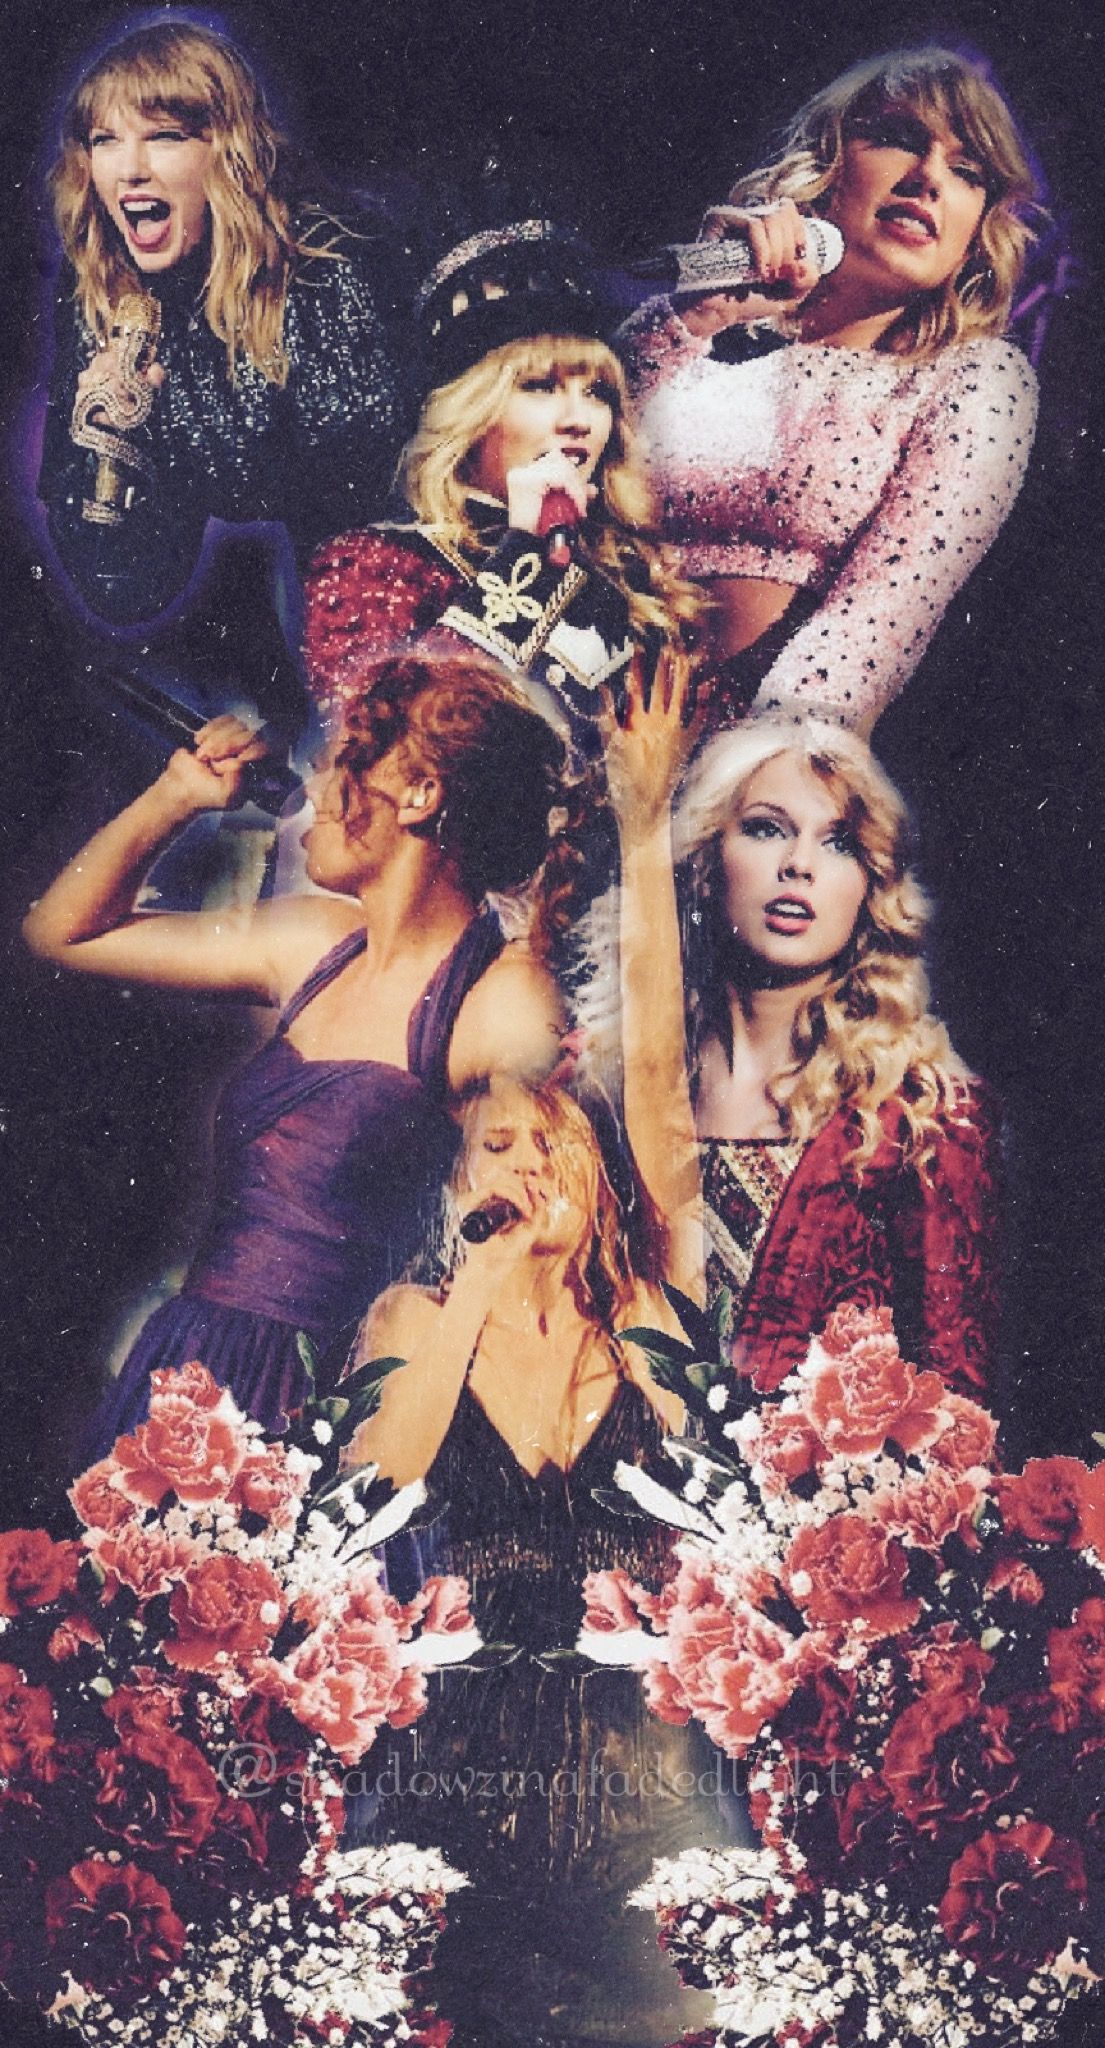 Taylor Swift performances throughout the eras. Taylor swift wallpaper, Taylor swift picture, Taylor swift fan